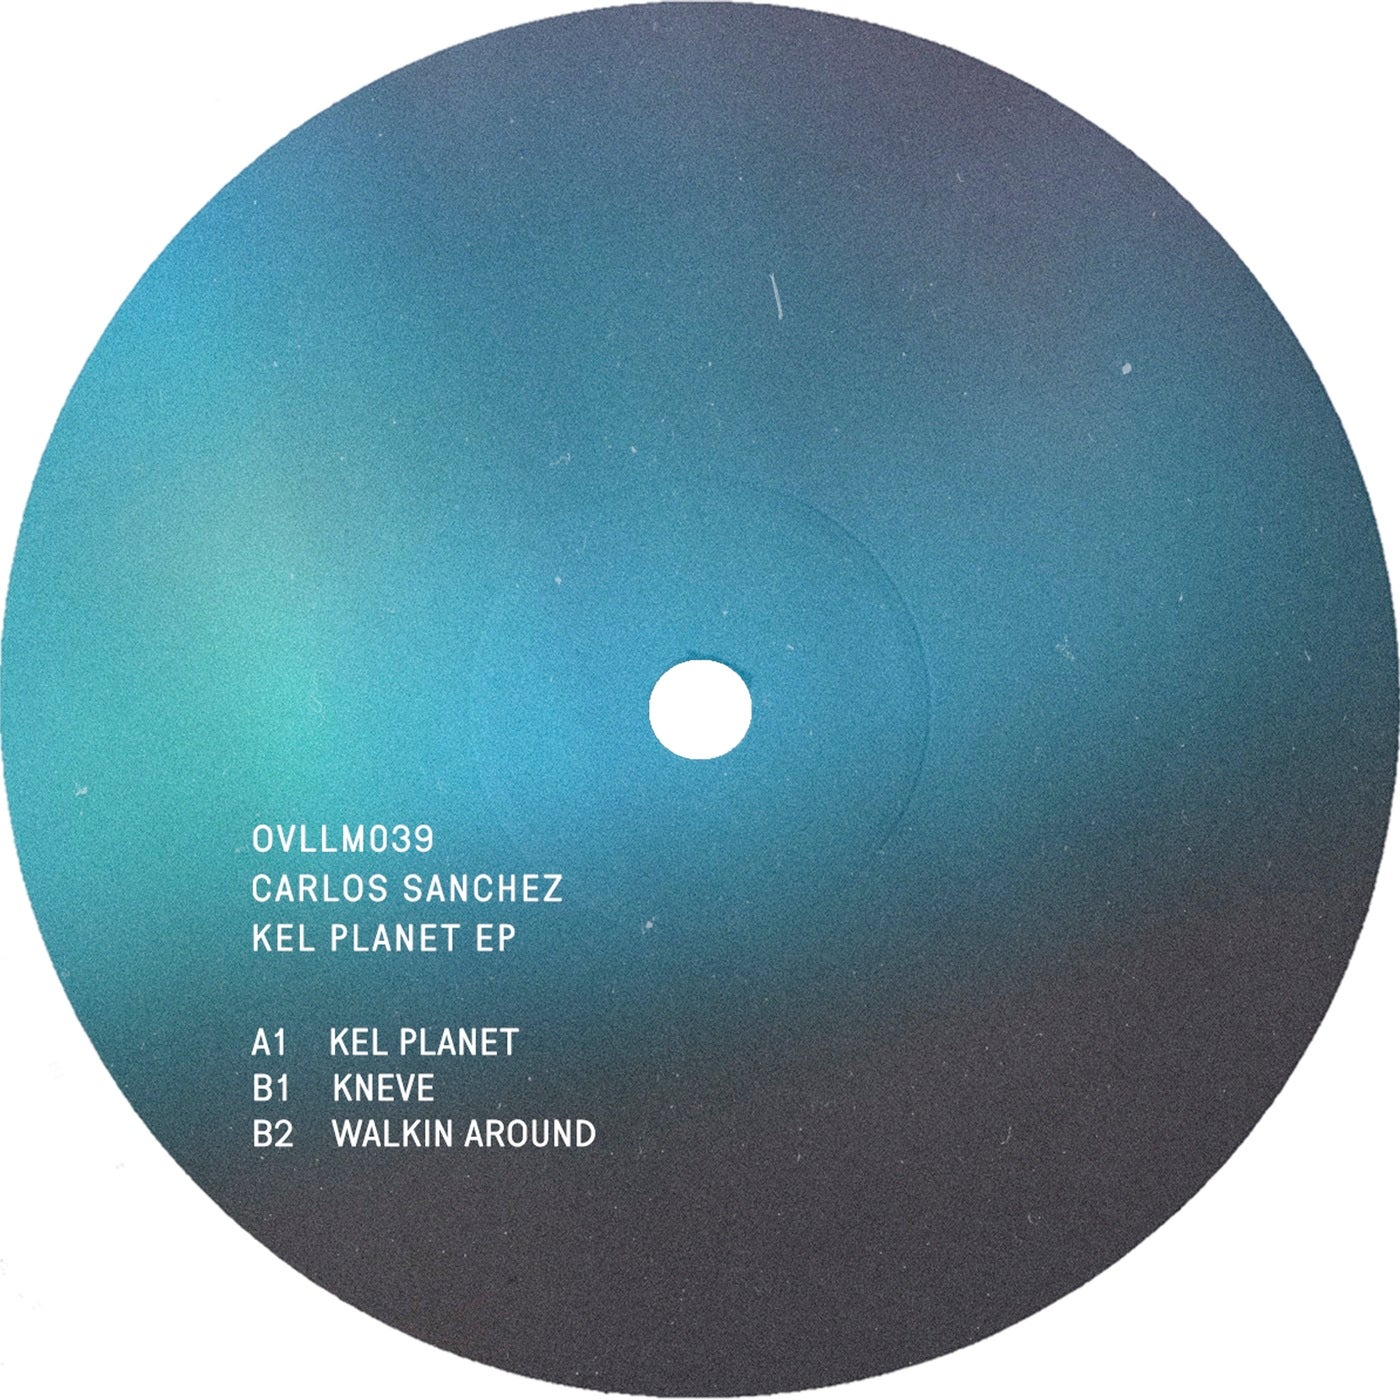 Carlos Sánchez – Kel Planet Ep [OVLLM039]